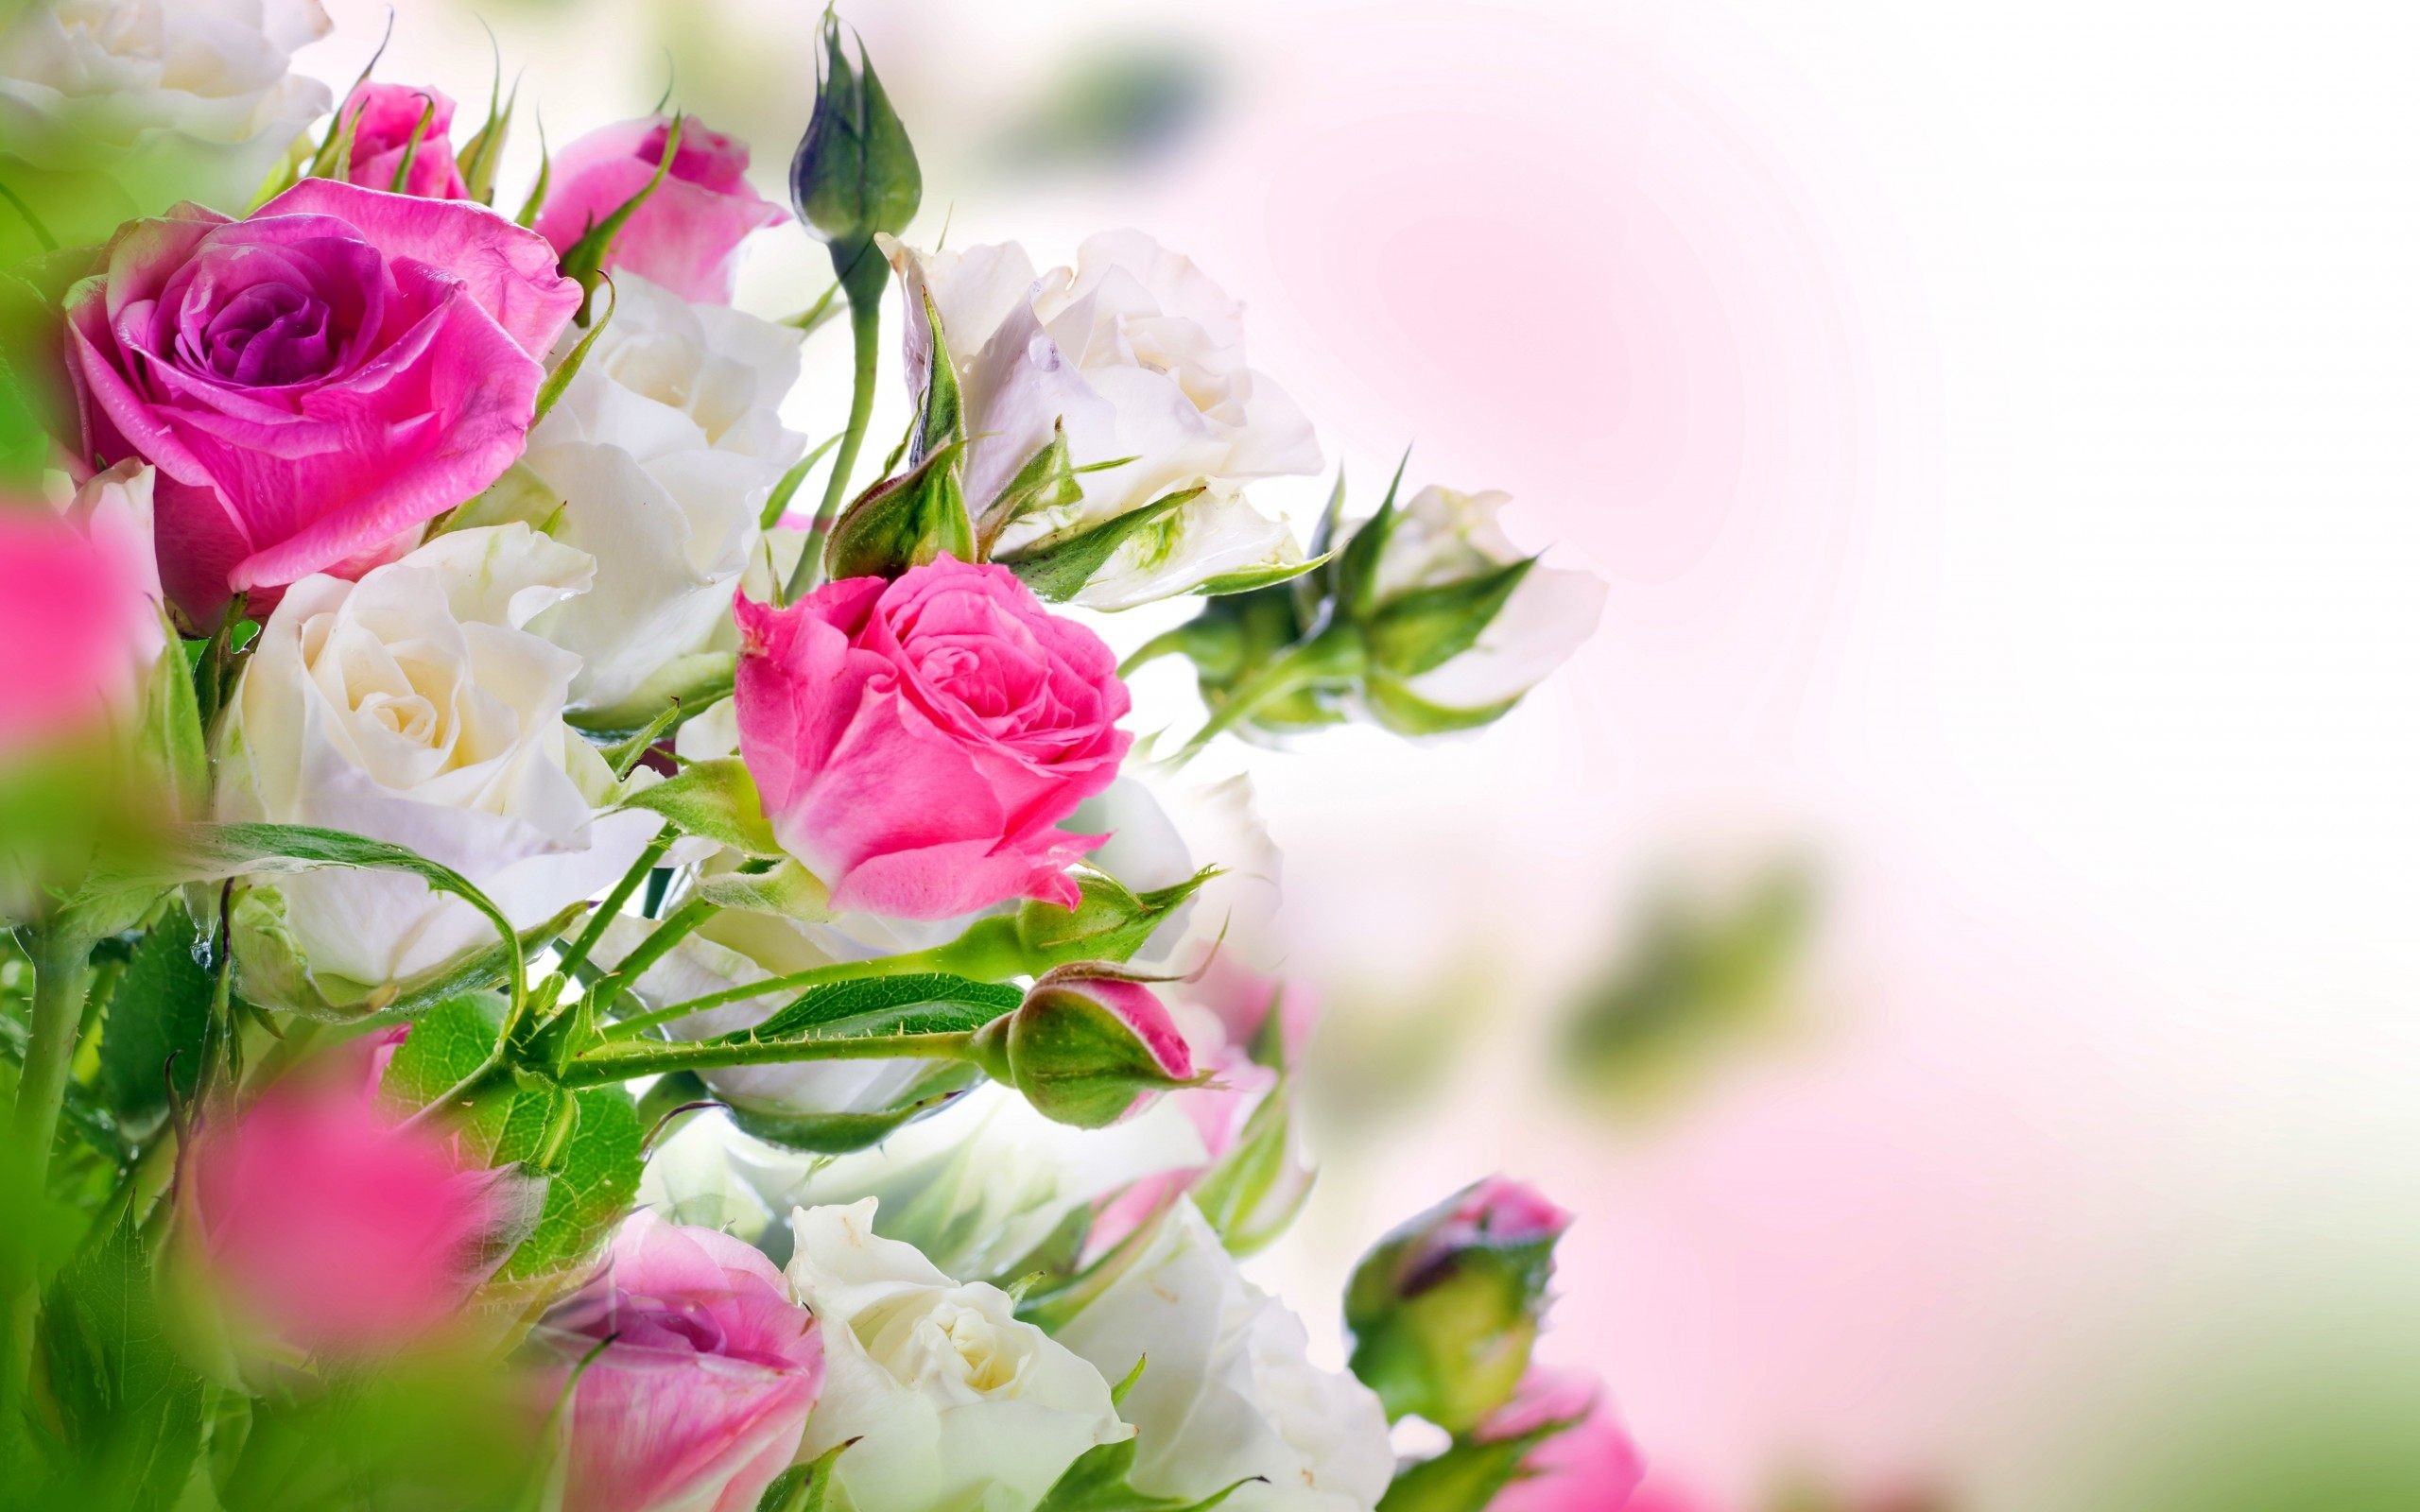 rose flower wallpaper hd free download,flower,pink,bouquet,garden roses,petal